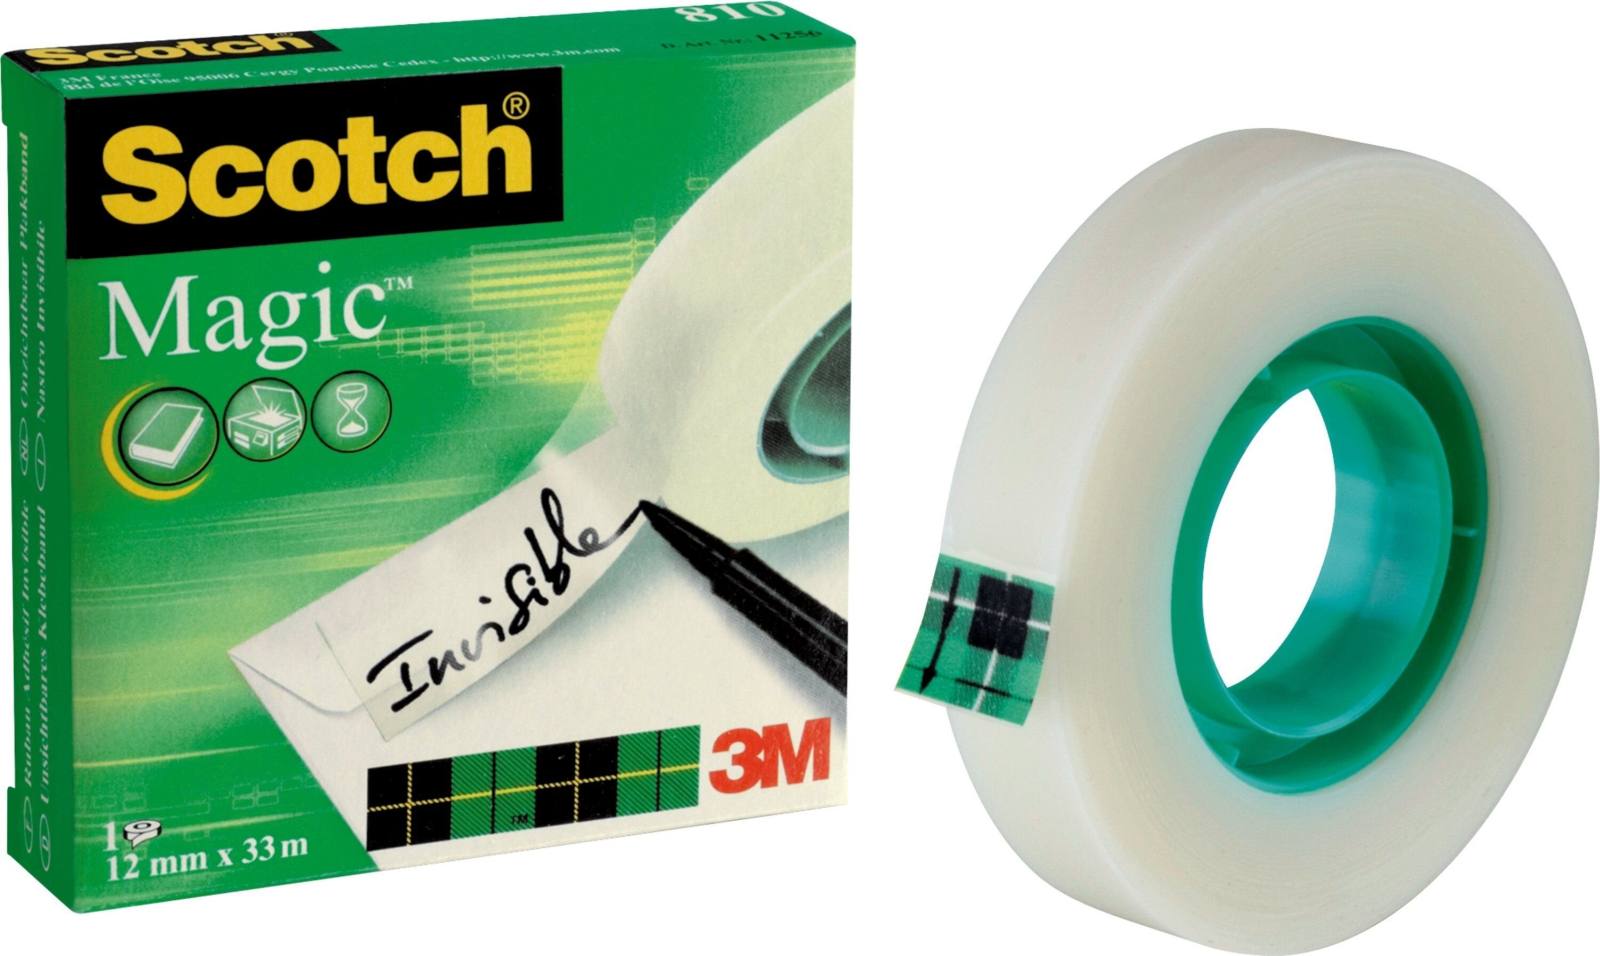 3M Scotch Magic adhesive tape 1 roll 12 mm x 33 m